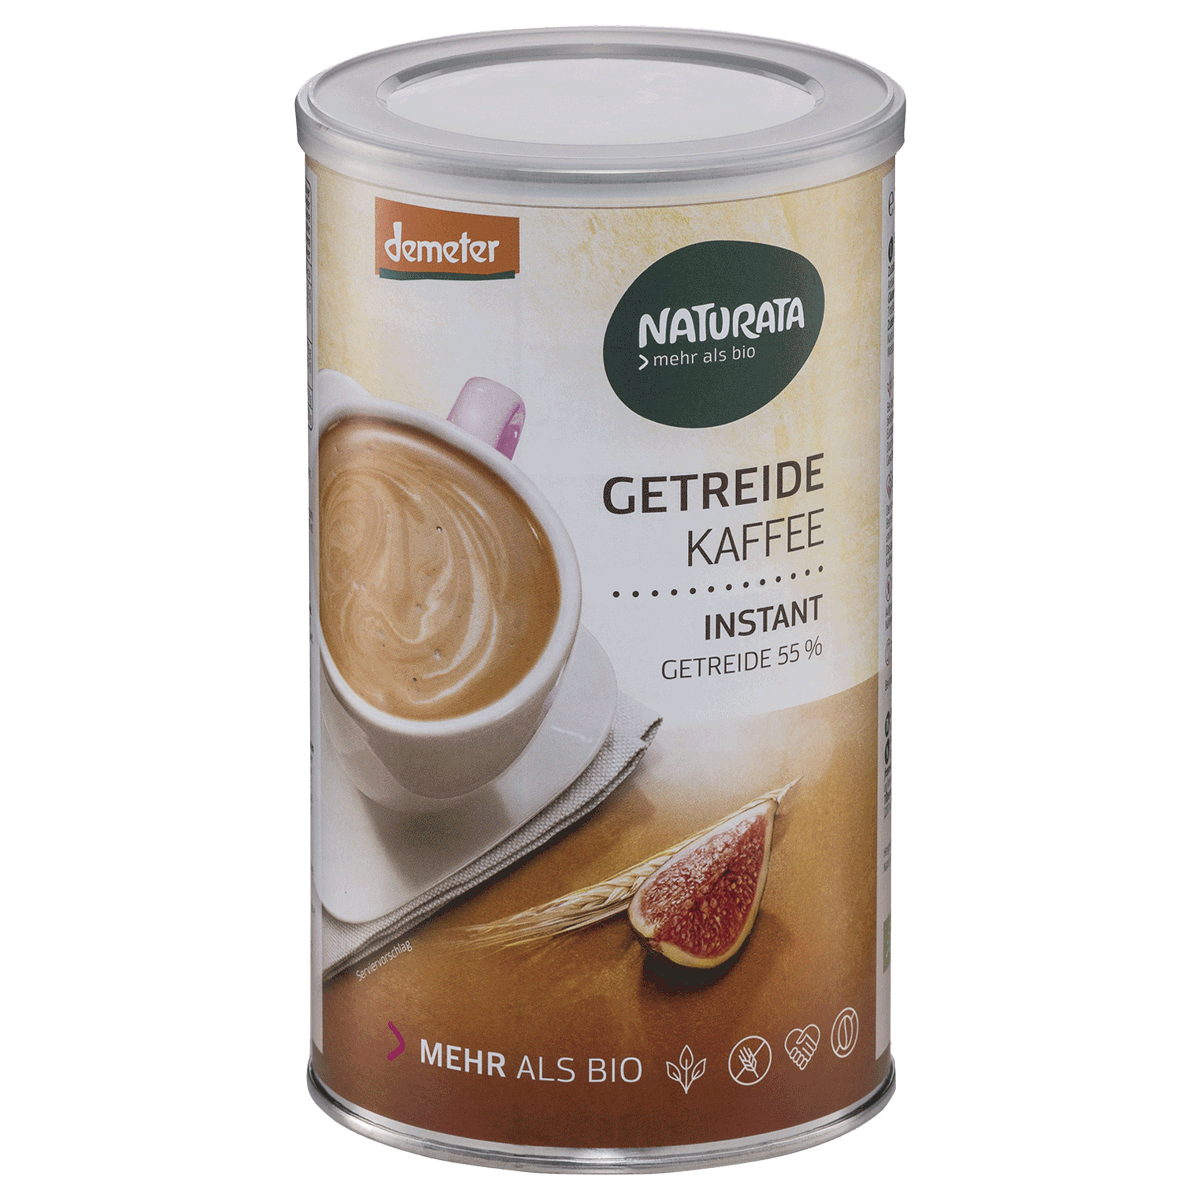 Naturata Getreidekaffee Classic Instant Dose kaufen | Vitaminplus